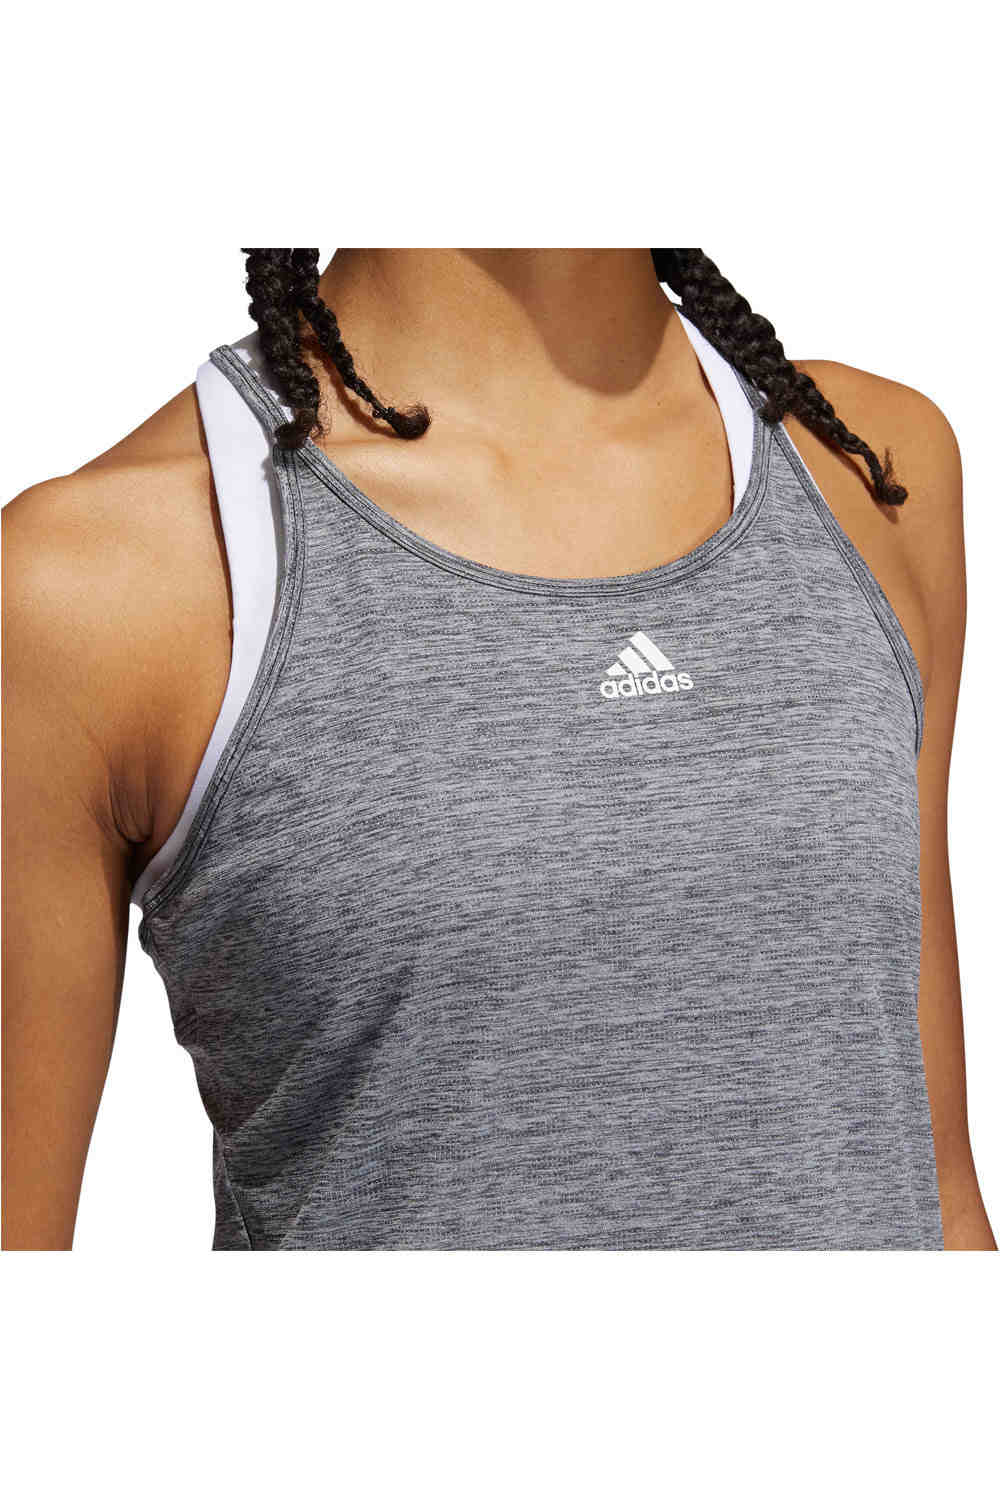 adidas camiseta tirantes fitness mujer PERFORMANCE TNK vista detalle